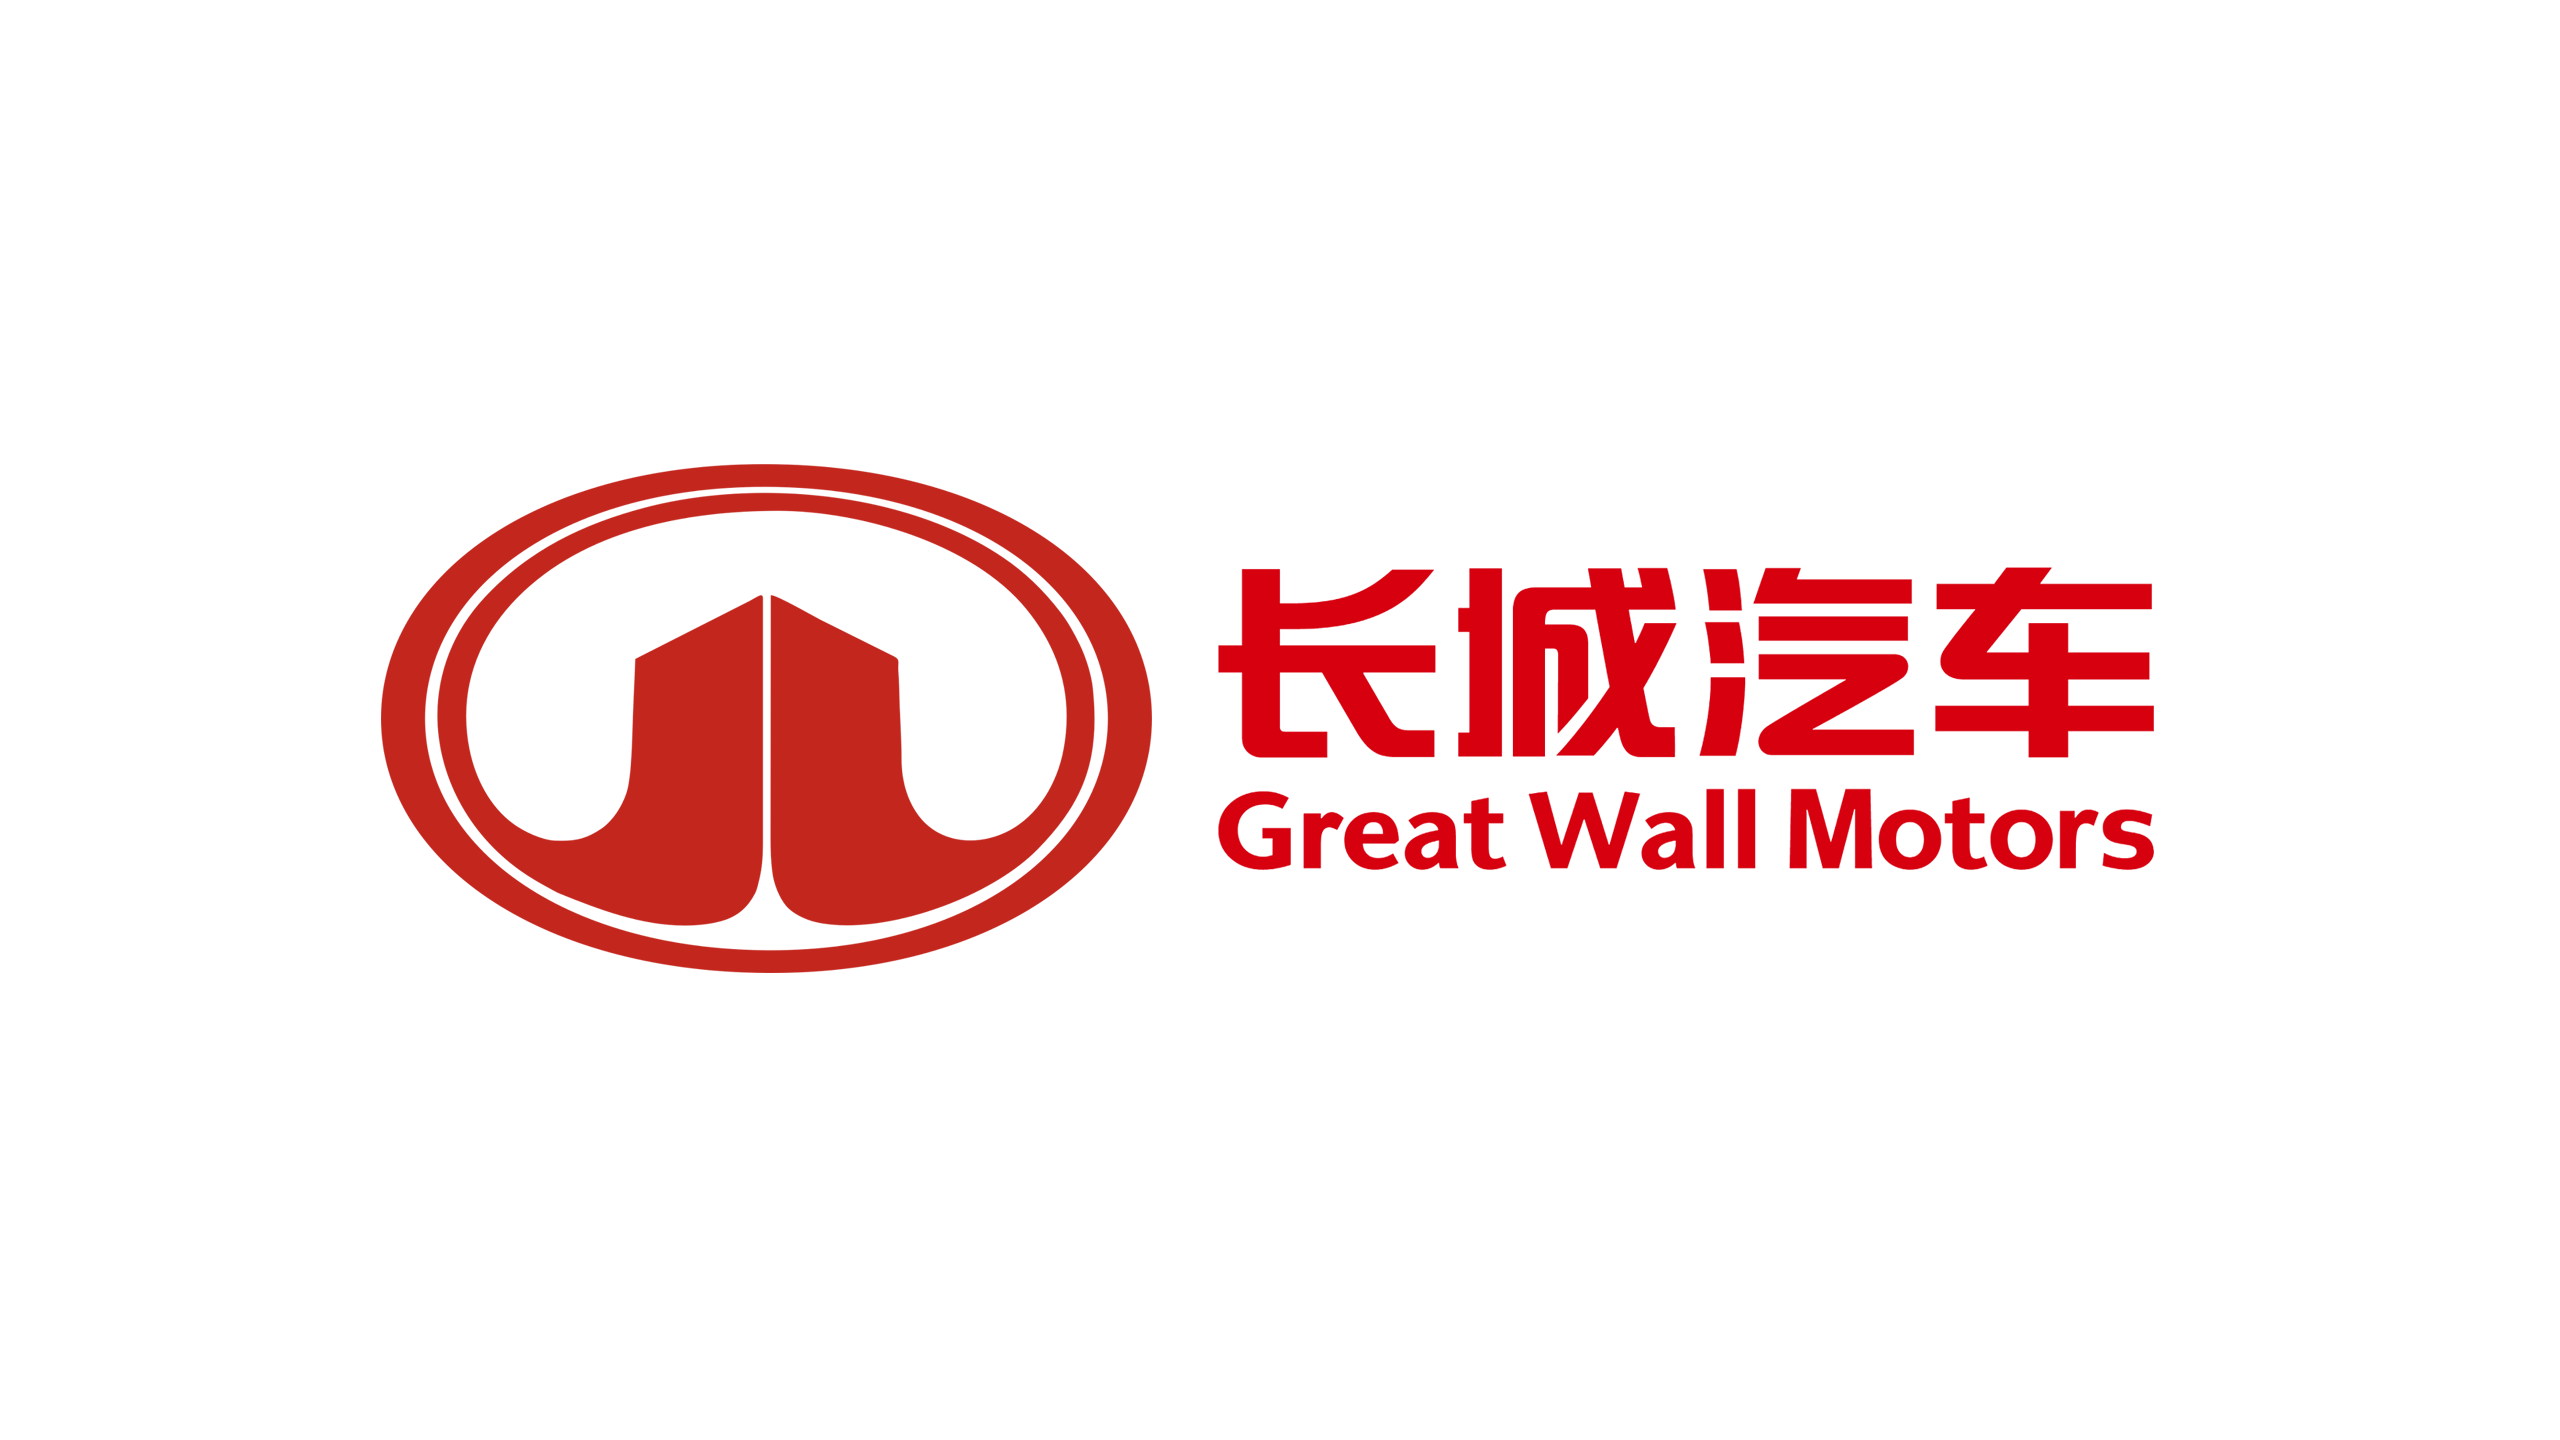 Great Title the Walls Logo - LogoDix